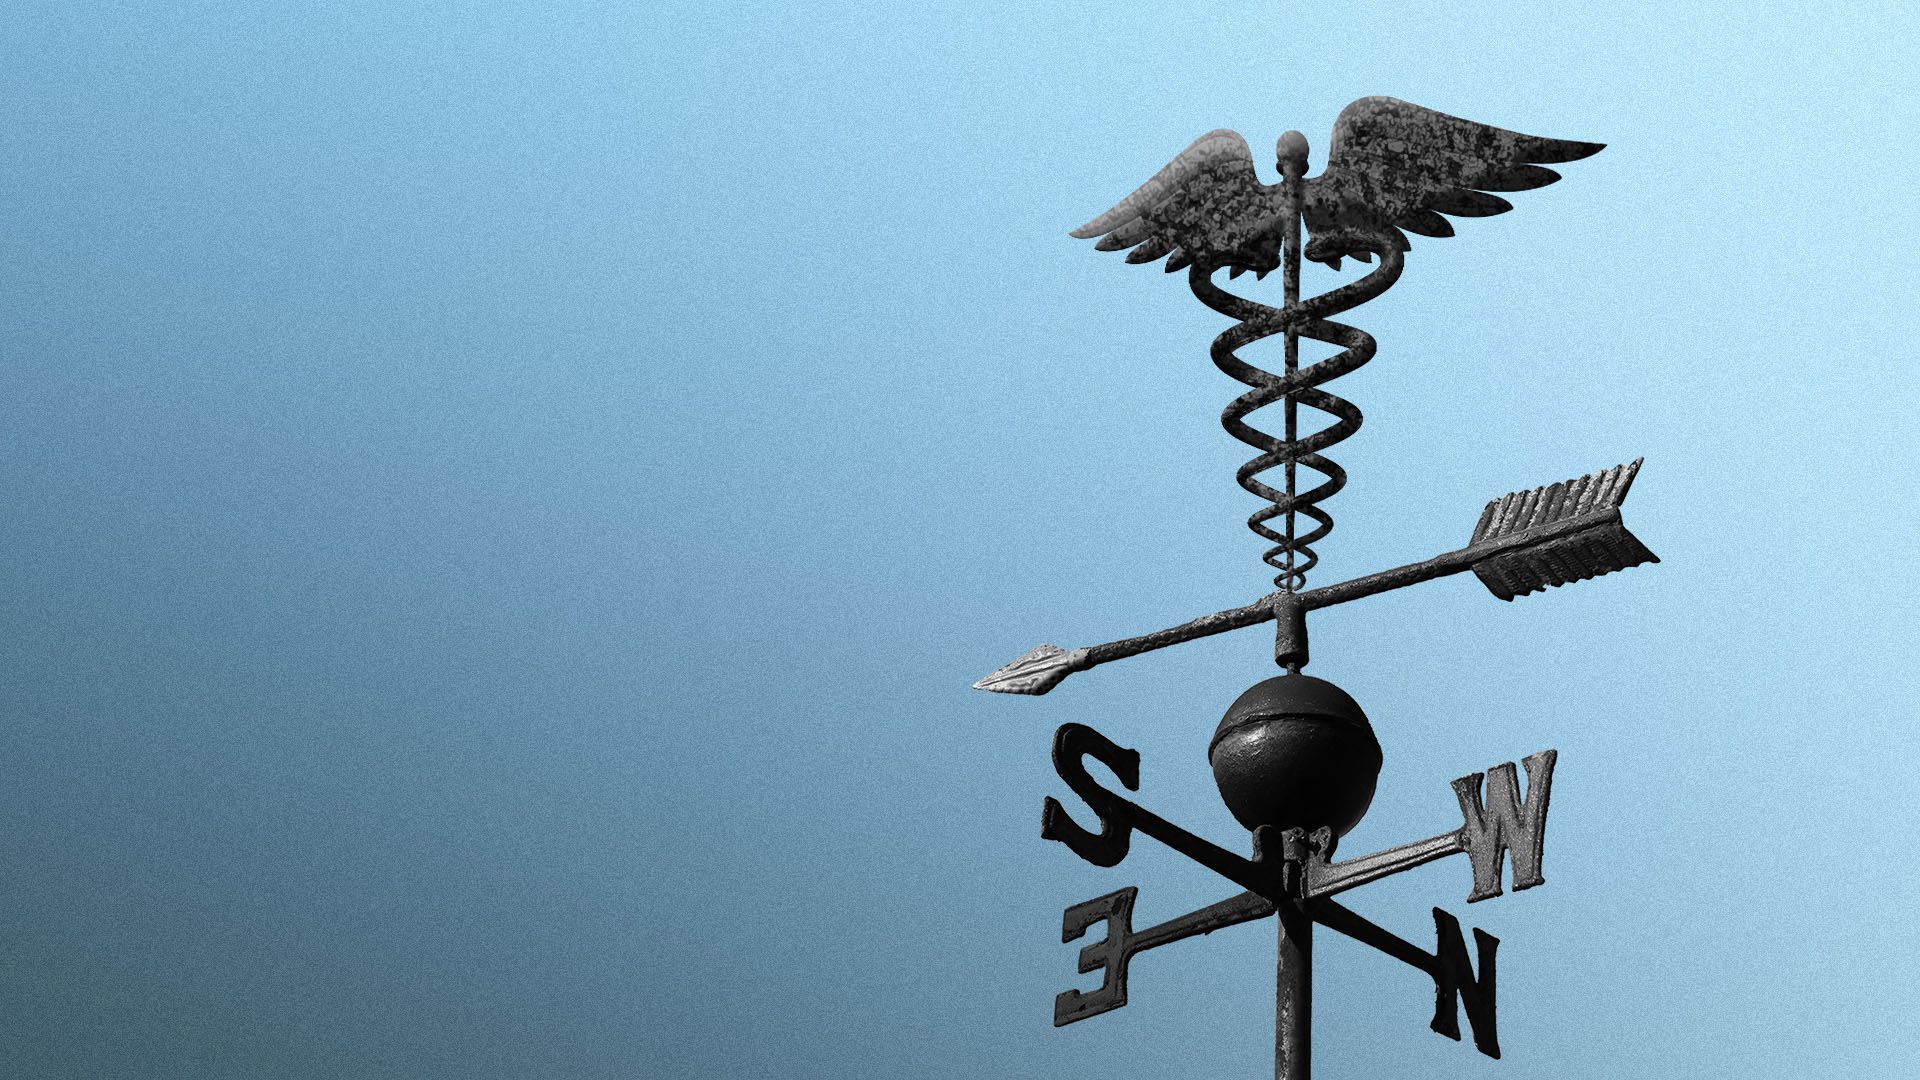 Illustration of a health care weathervane